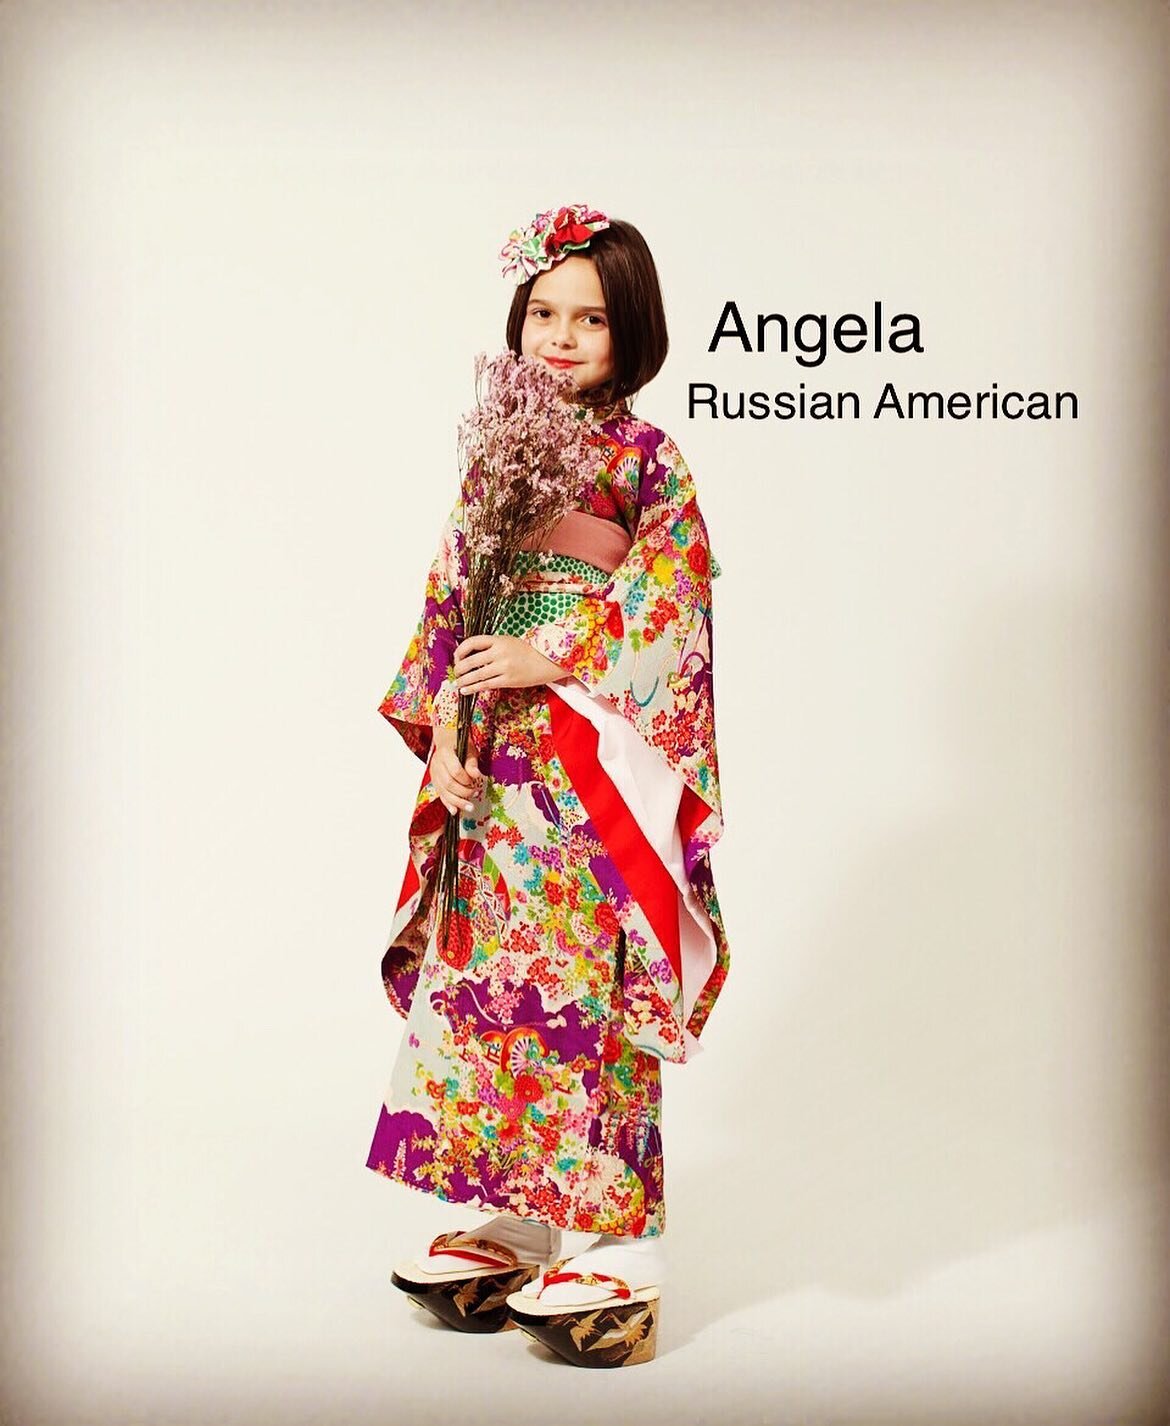 Angela with Japanese vintage kimono💕
#ny #nykids #sichigosan #kimono #japaneseculture #japanesetraditional #kimonogirl #vintagekimono #salonjatel #unionsquare #birthdayphotoshoot #3yearsold #5yearsold #7yearsold #nyfw #nyで七五三 #七五三 #七五三前撮り #アンティーク着物 